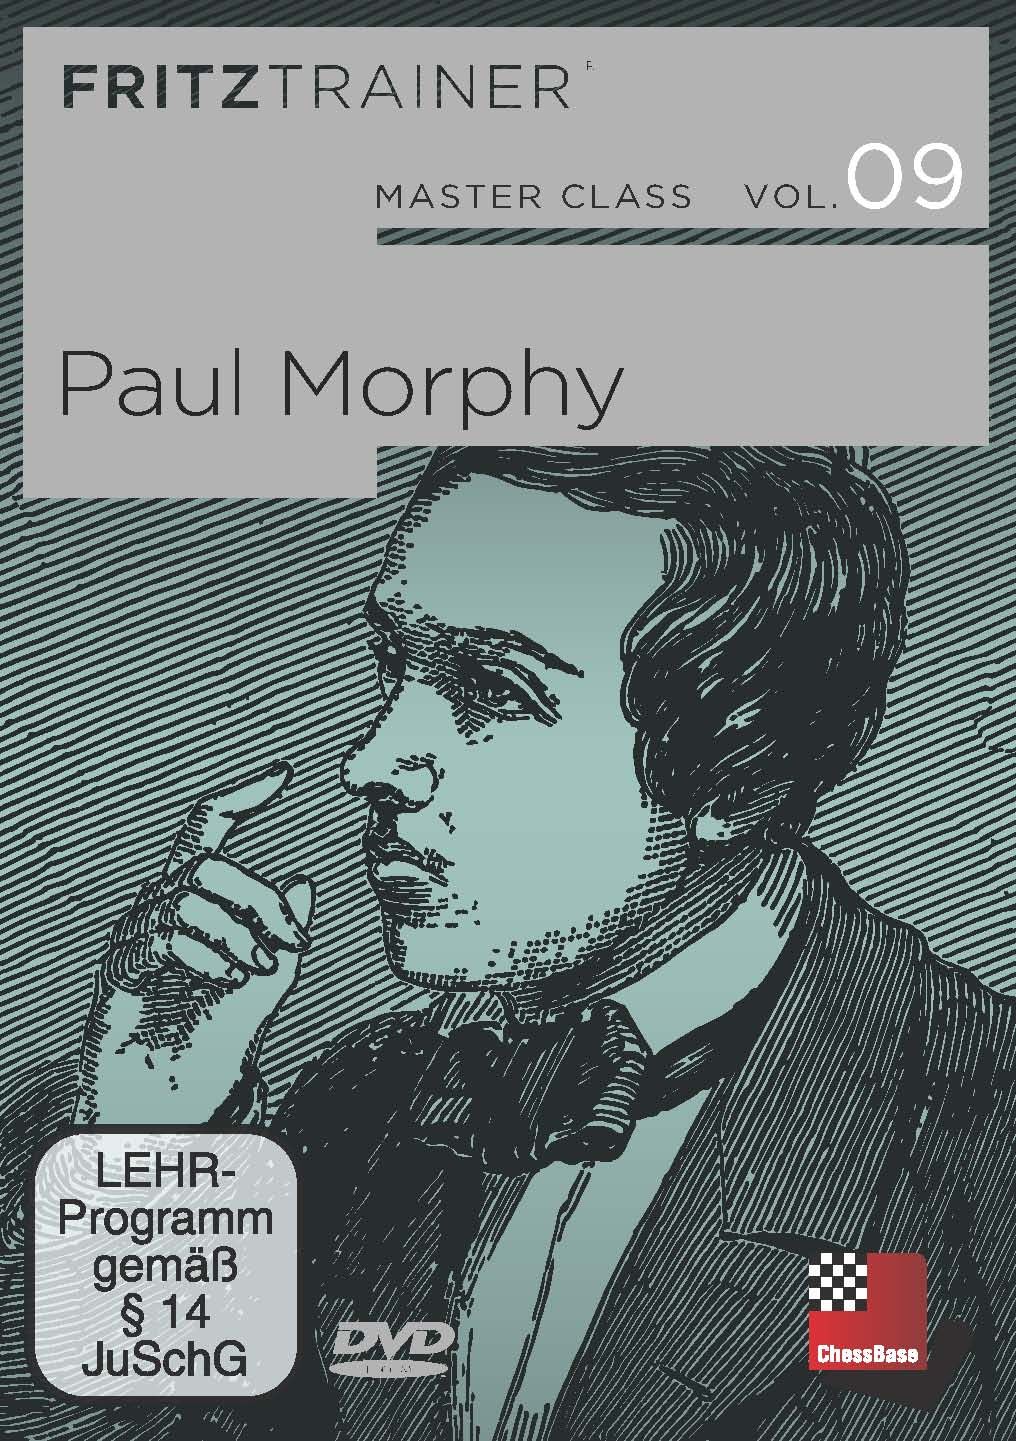 Opera Game - Paul Morphy 